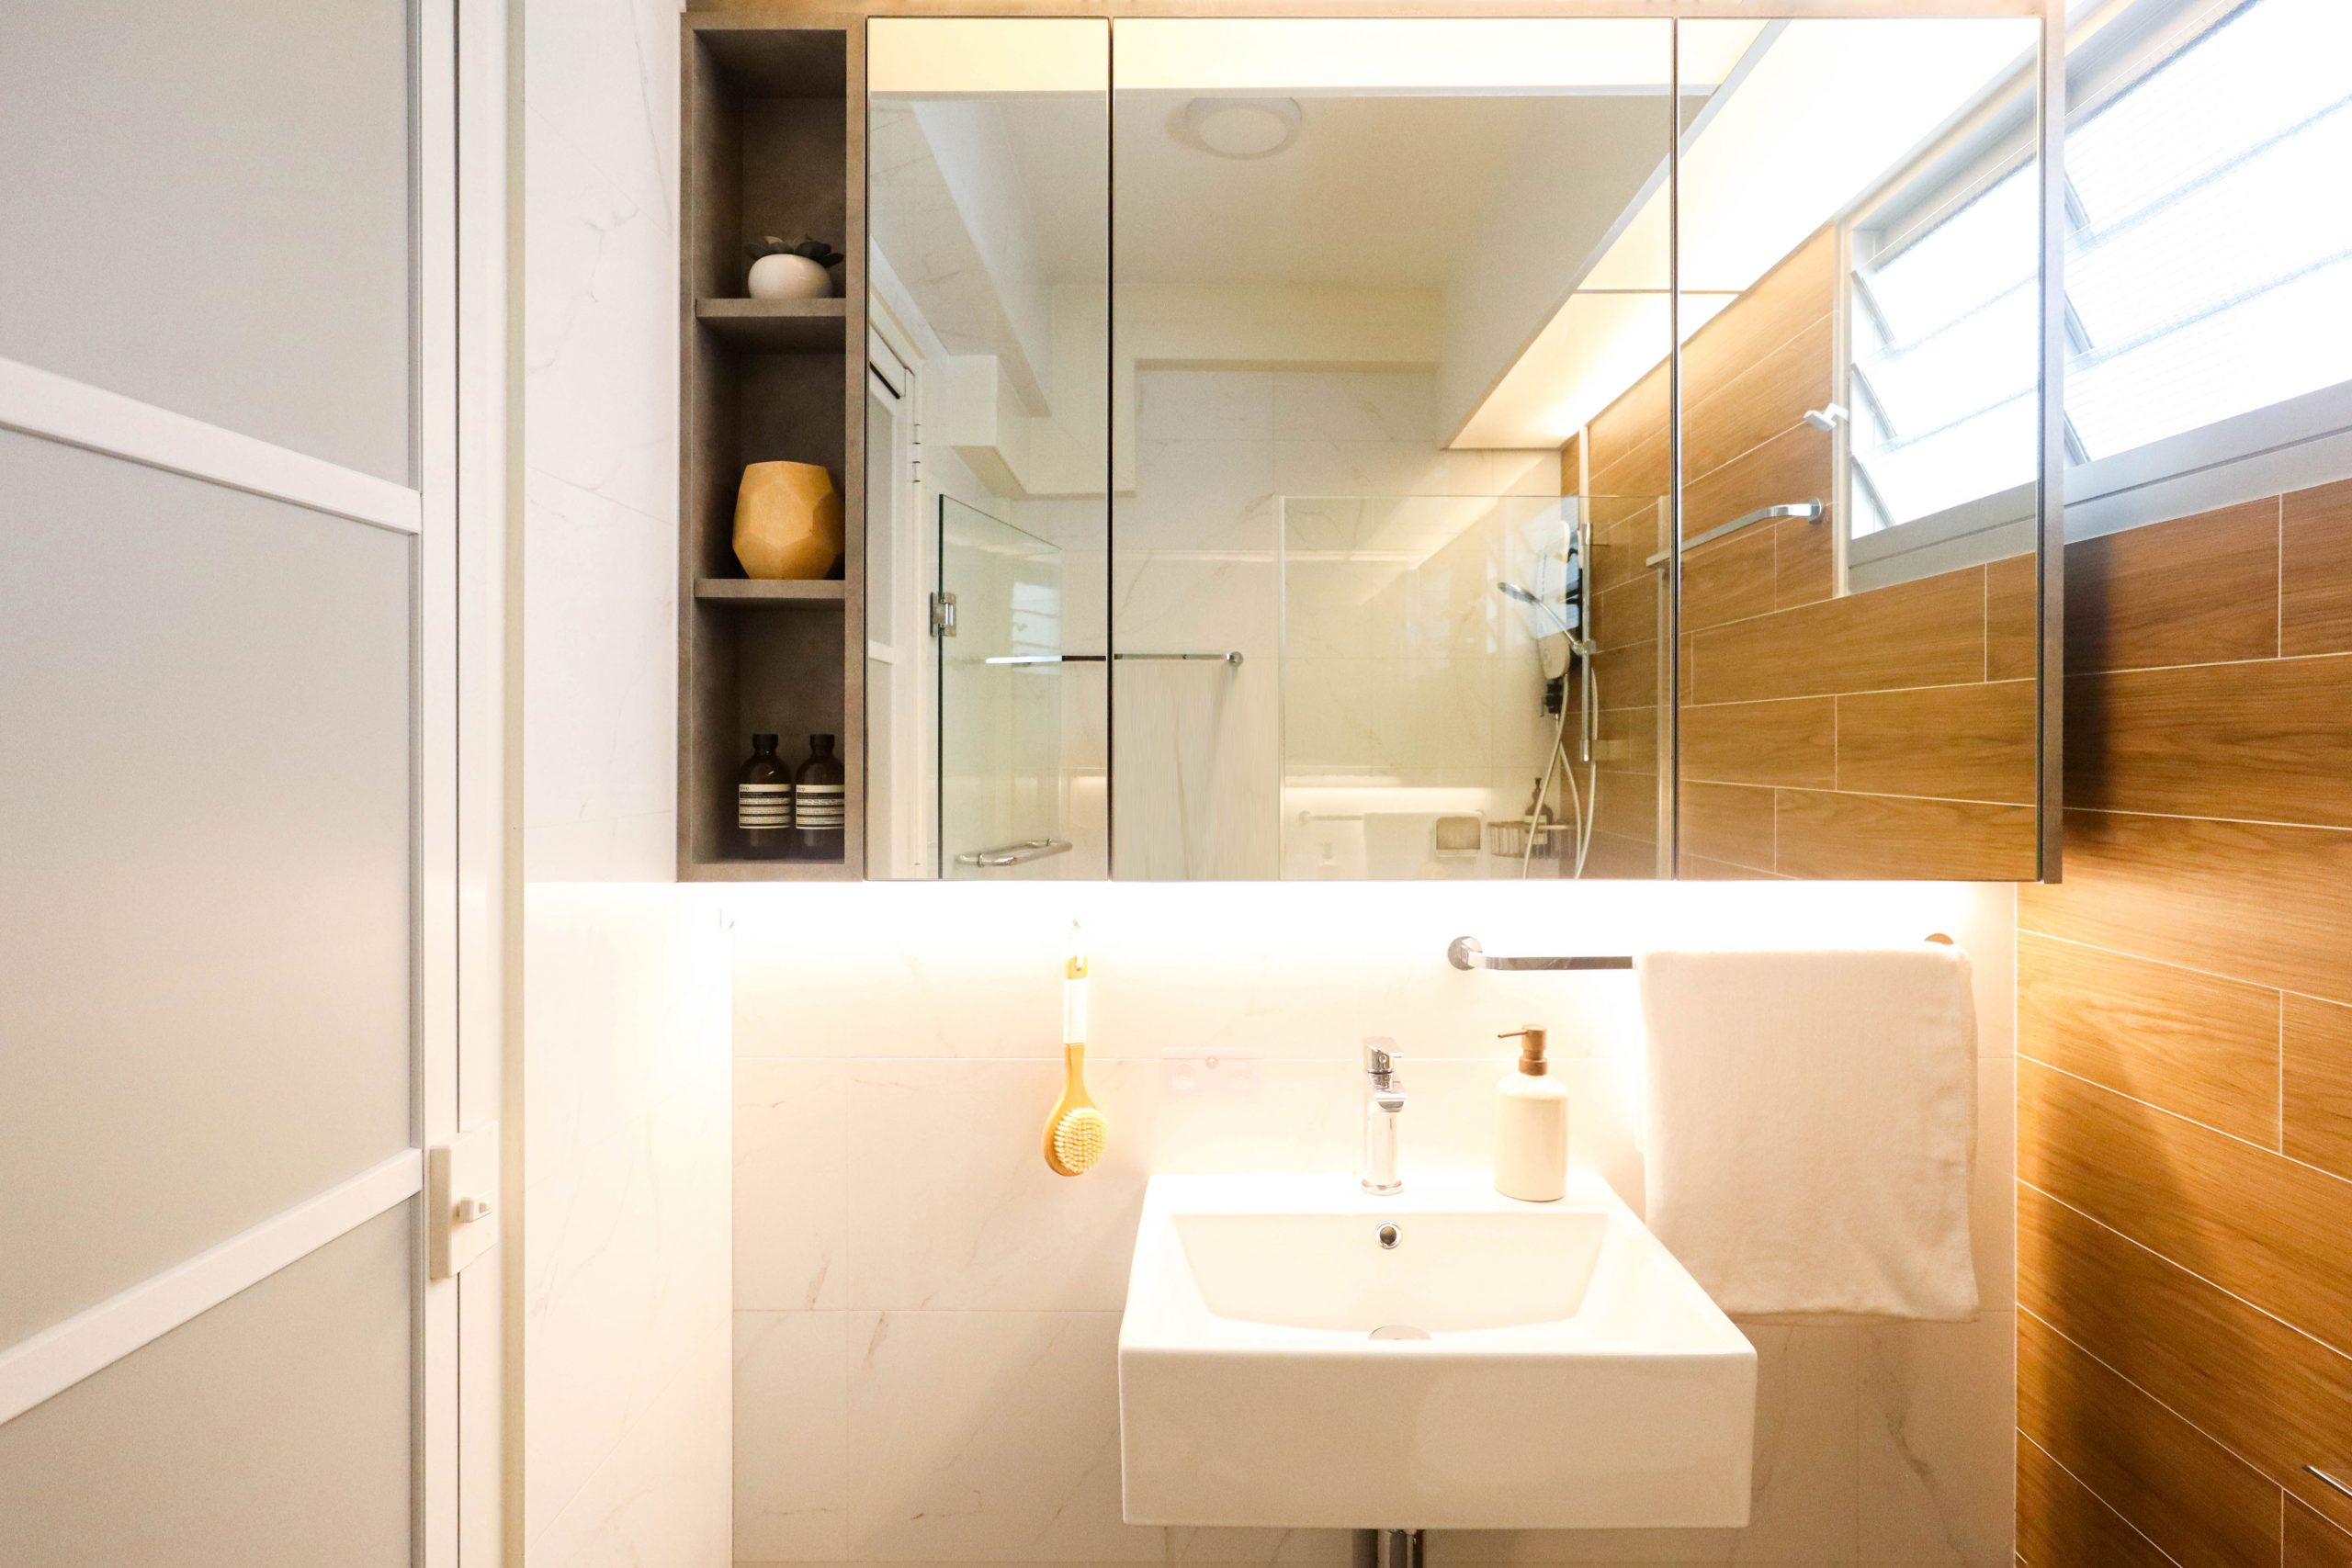 muji style HDB bathroom with vanity mirror shelf